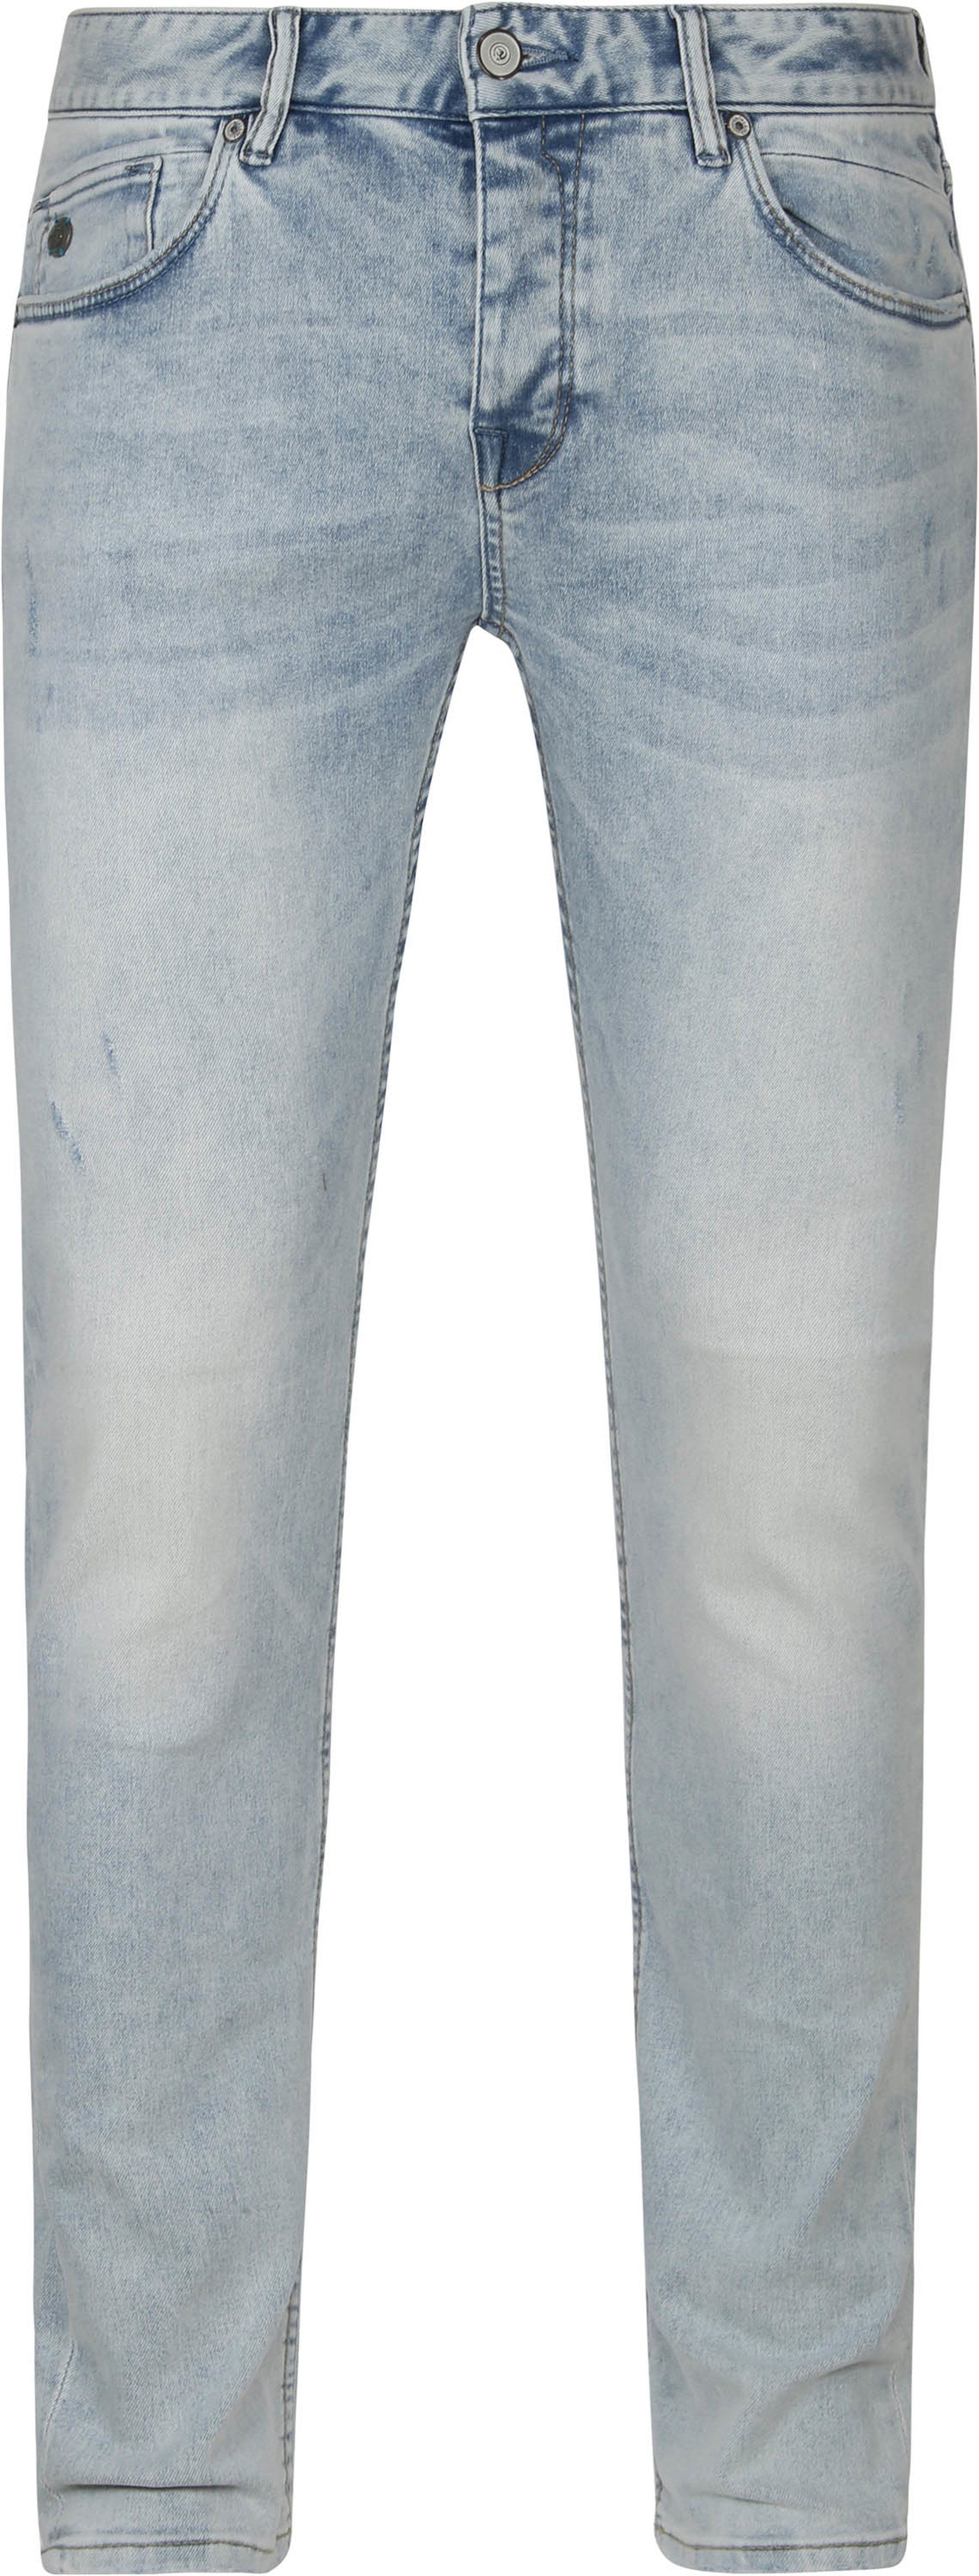 Cast Iron Riser Jeans Light Bright Wash Grey size W 30